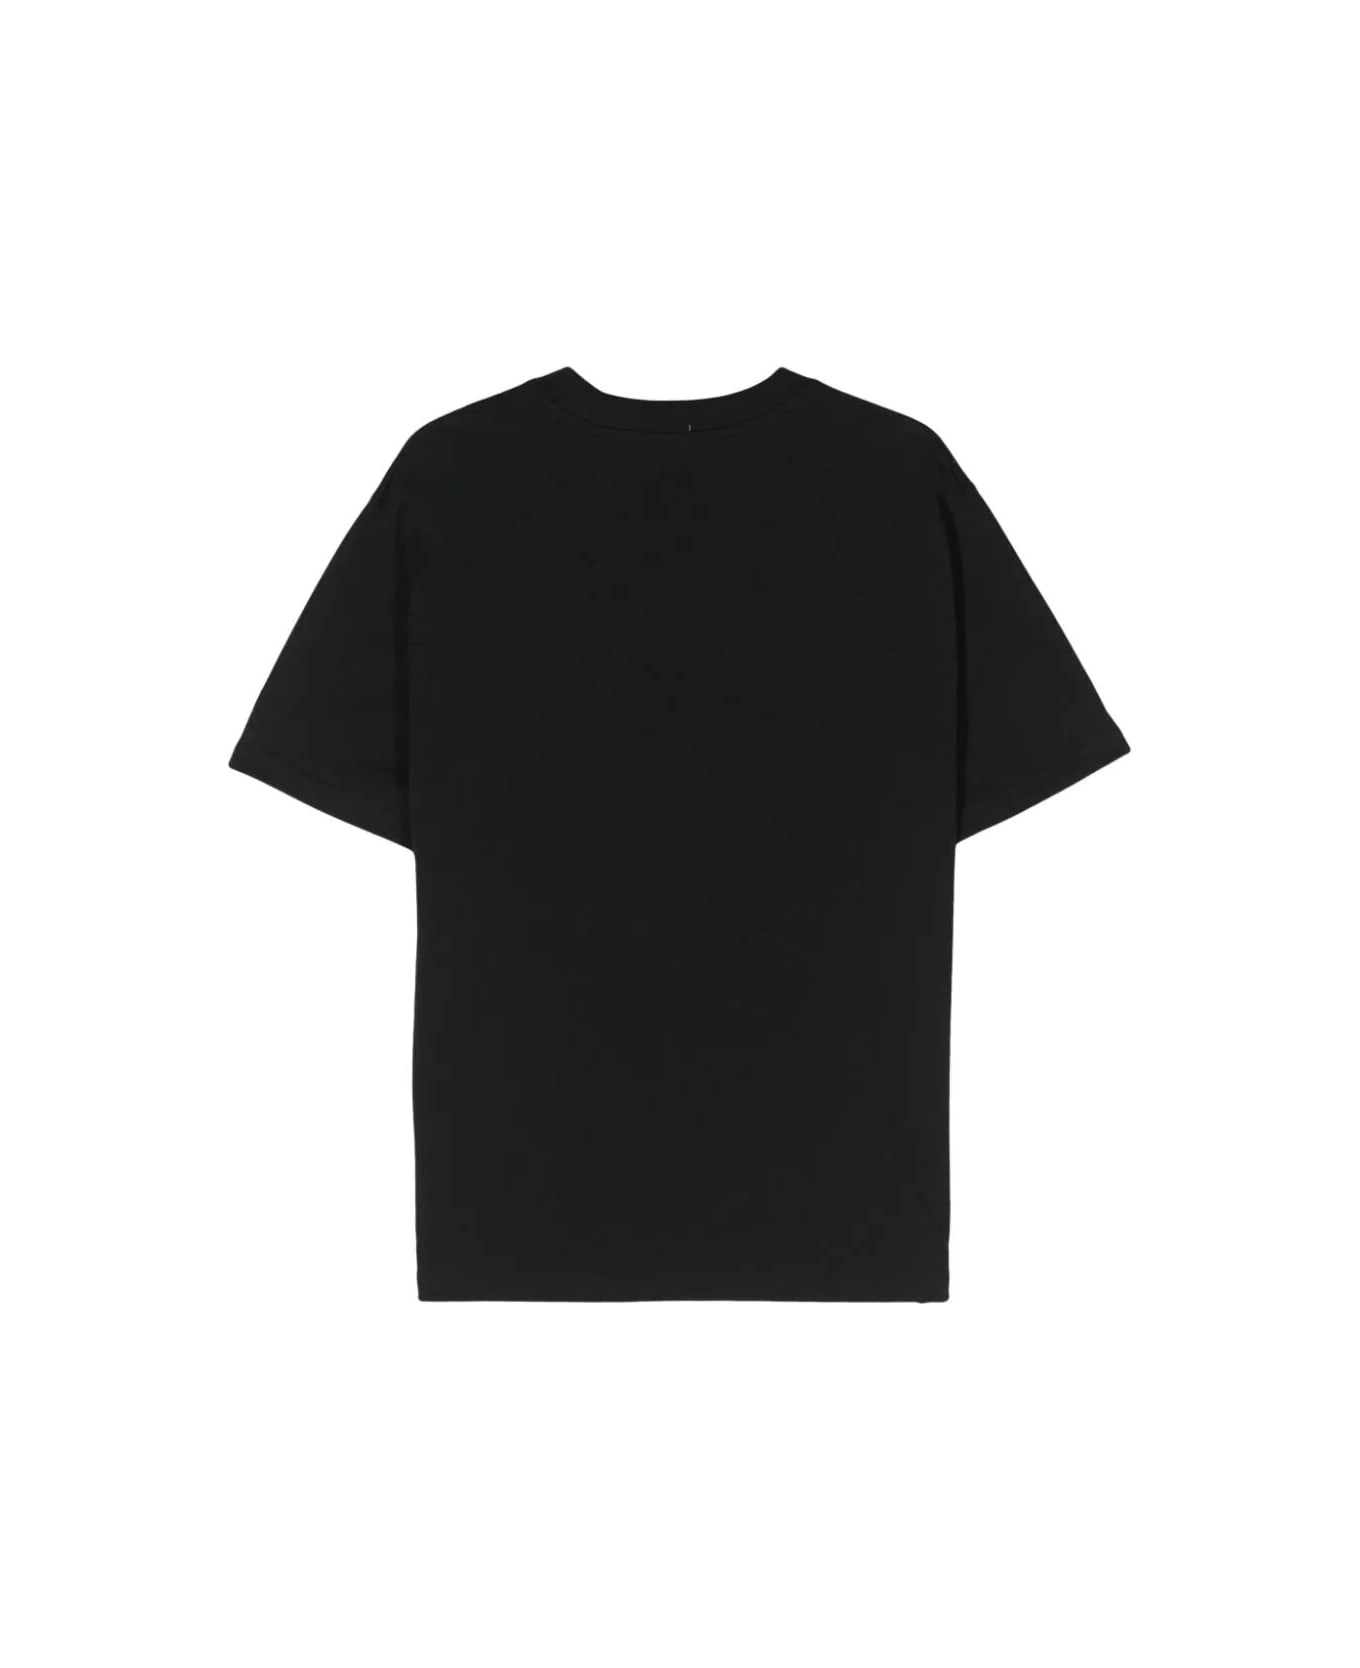 New Balance Athletics Models Never Age Relaxed T-shirt - Black